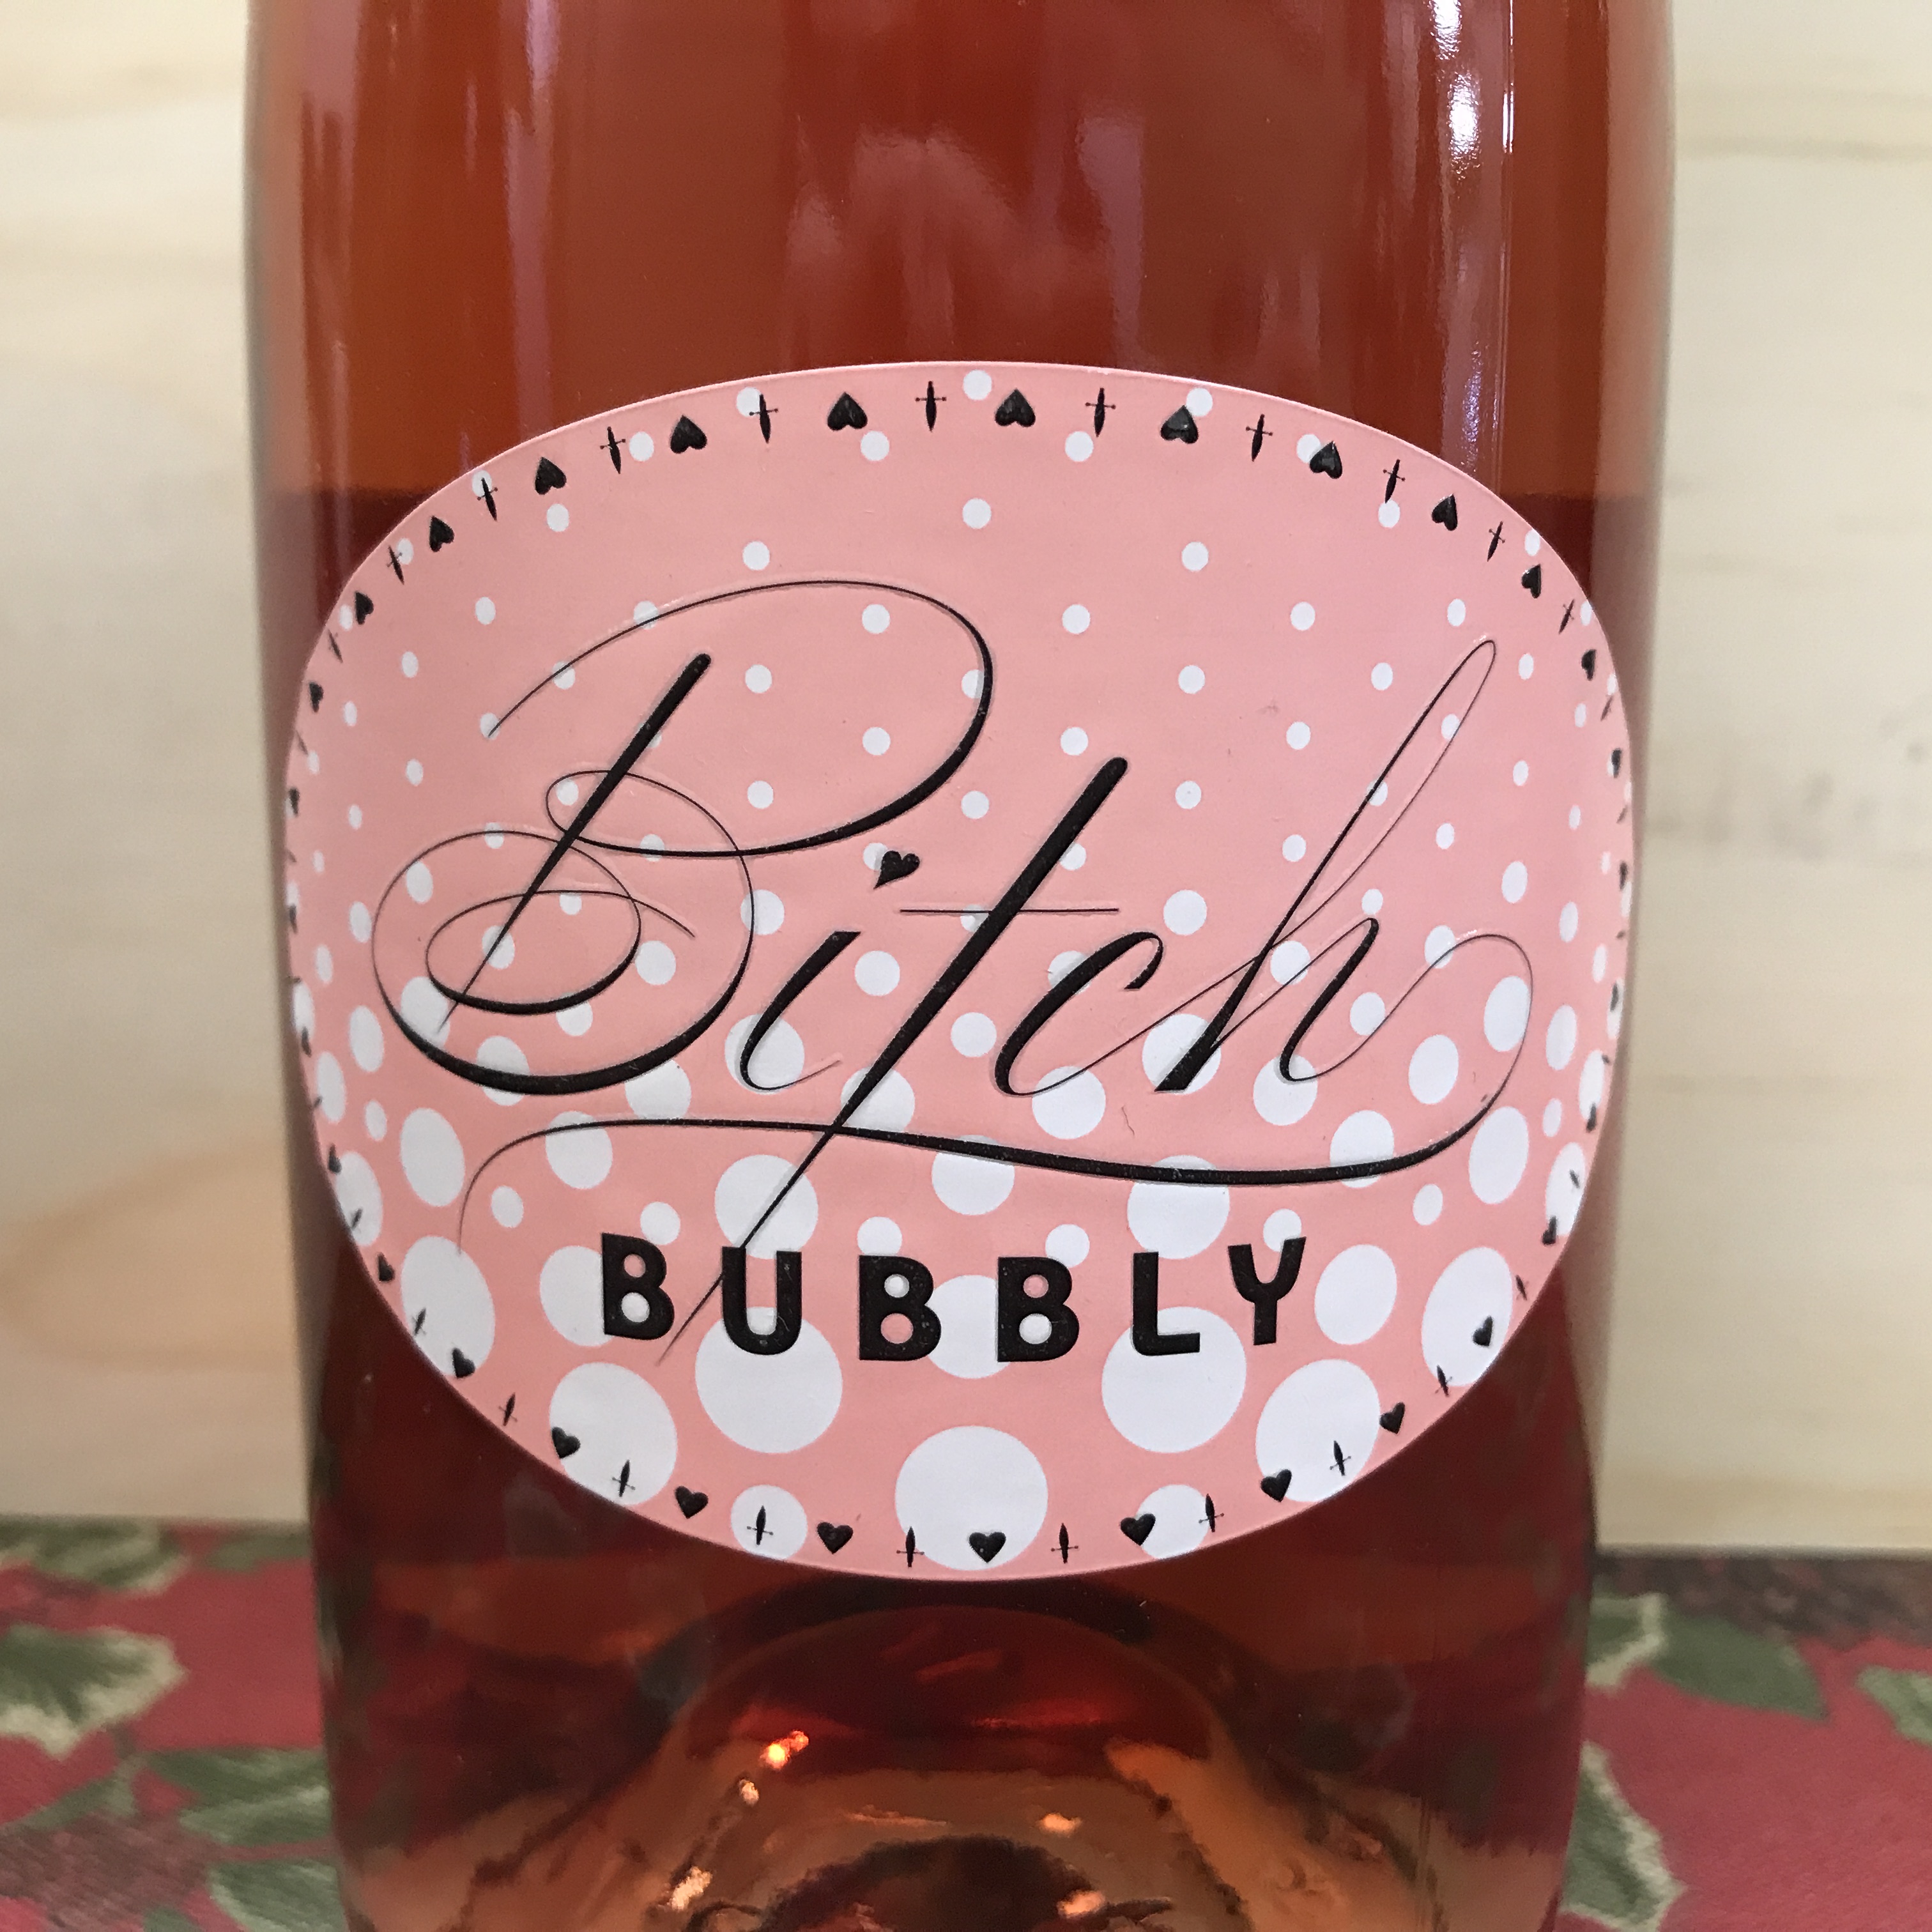 Bitch Bubbly Sparkling Rose Spain